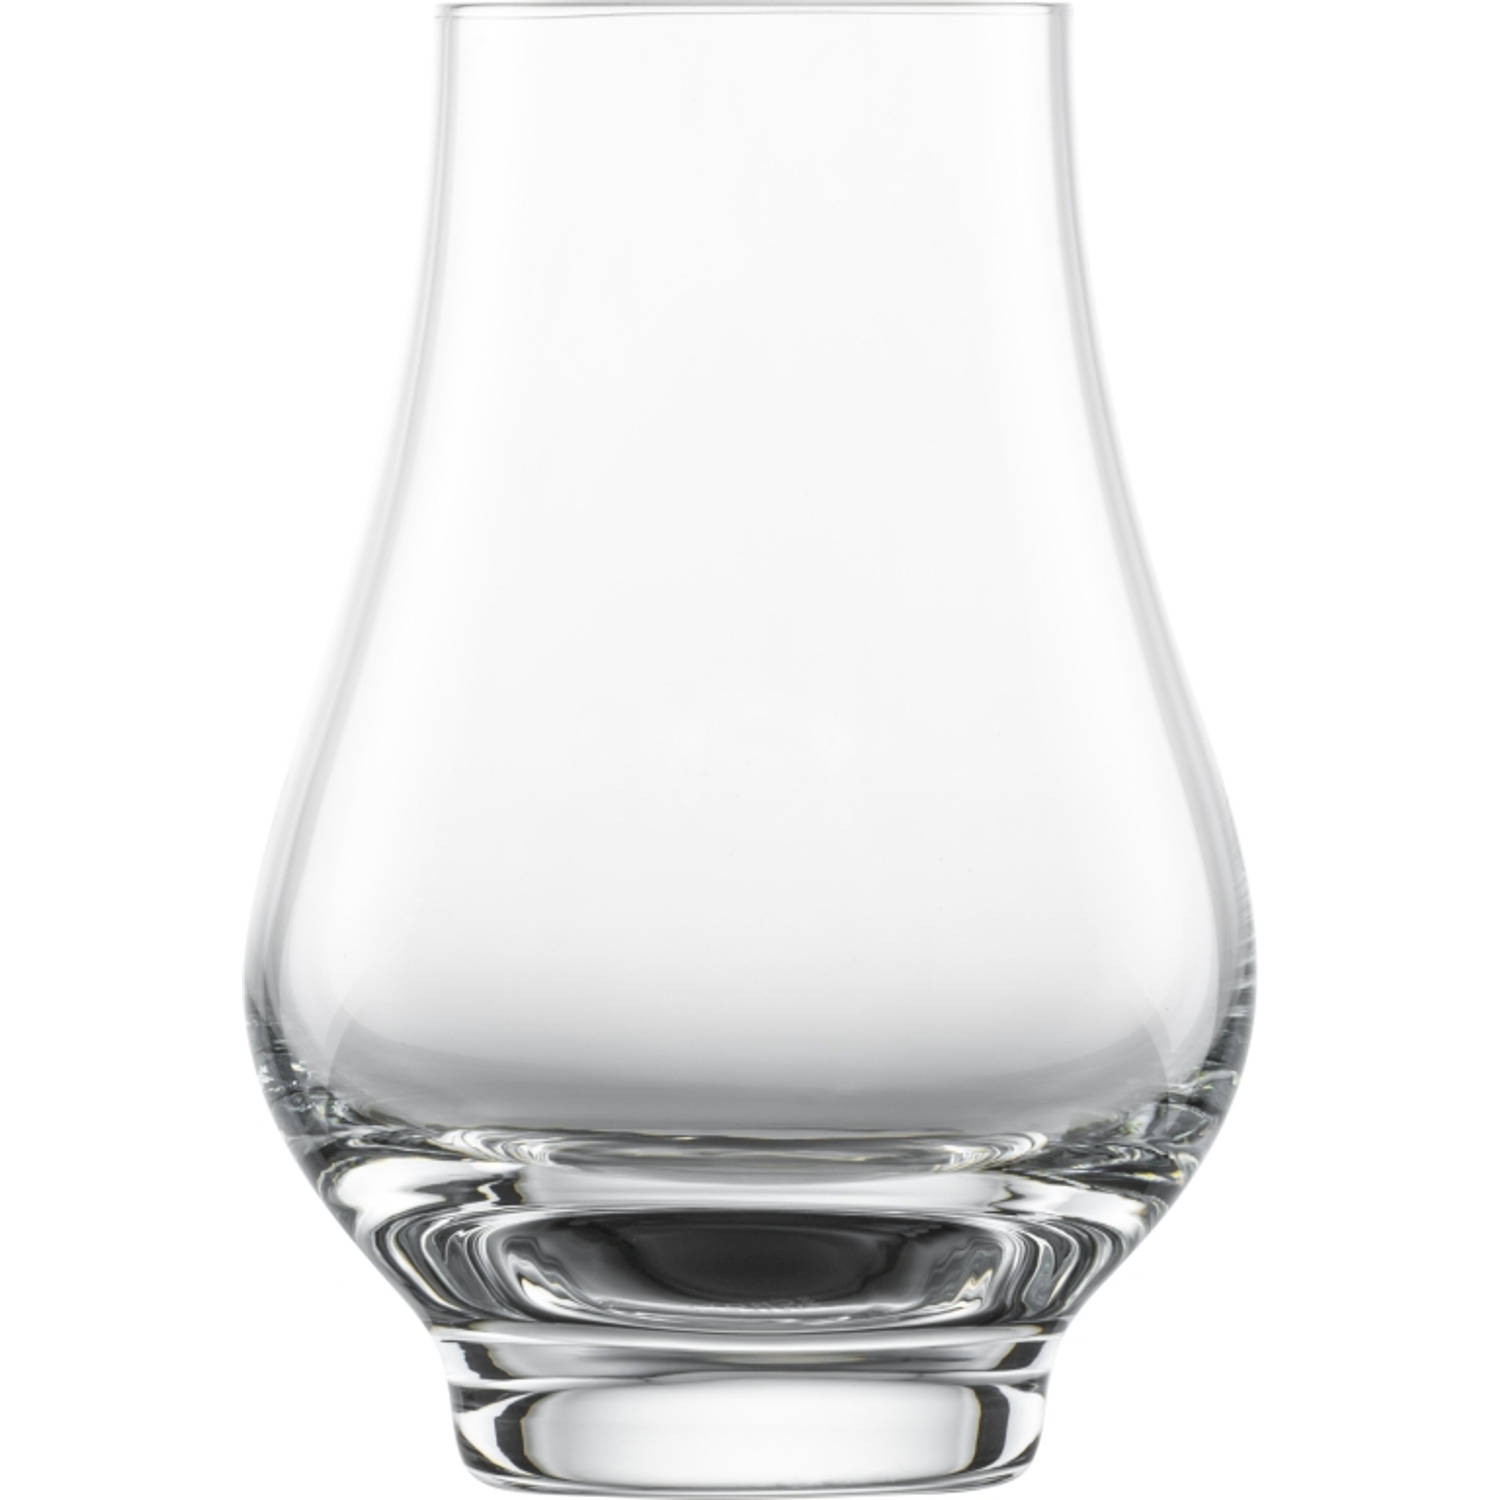 Zwiesel Whisky Nosing Tumbler Bar Special Glazenset 4 stuks glas in de kleur kristal, afmetingen: 8,3 cm x 8,3 cm x 12 cm, 130.000